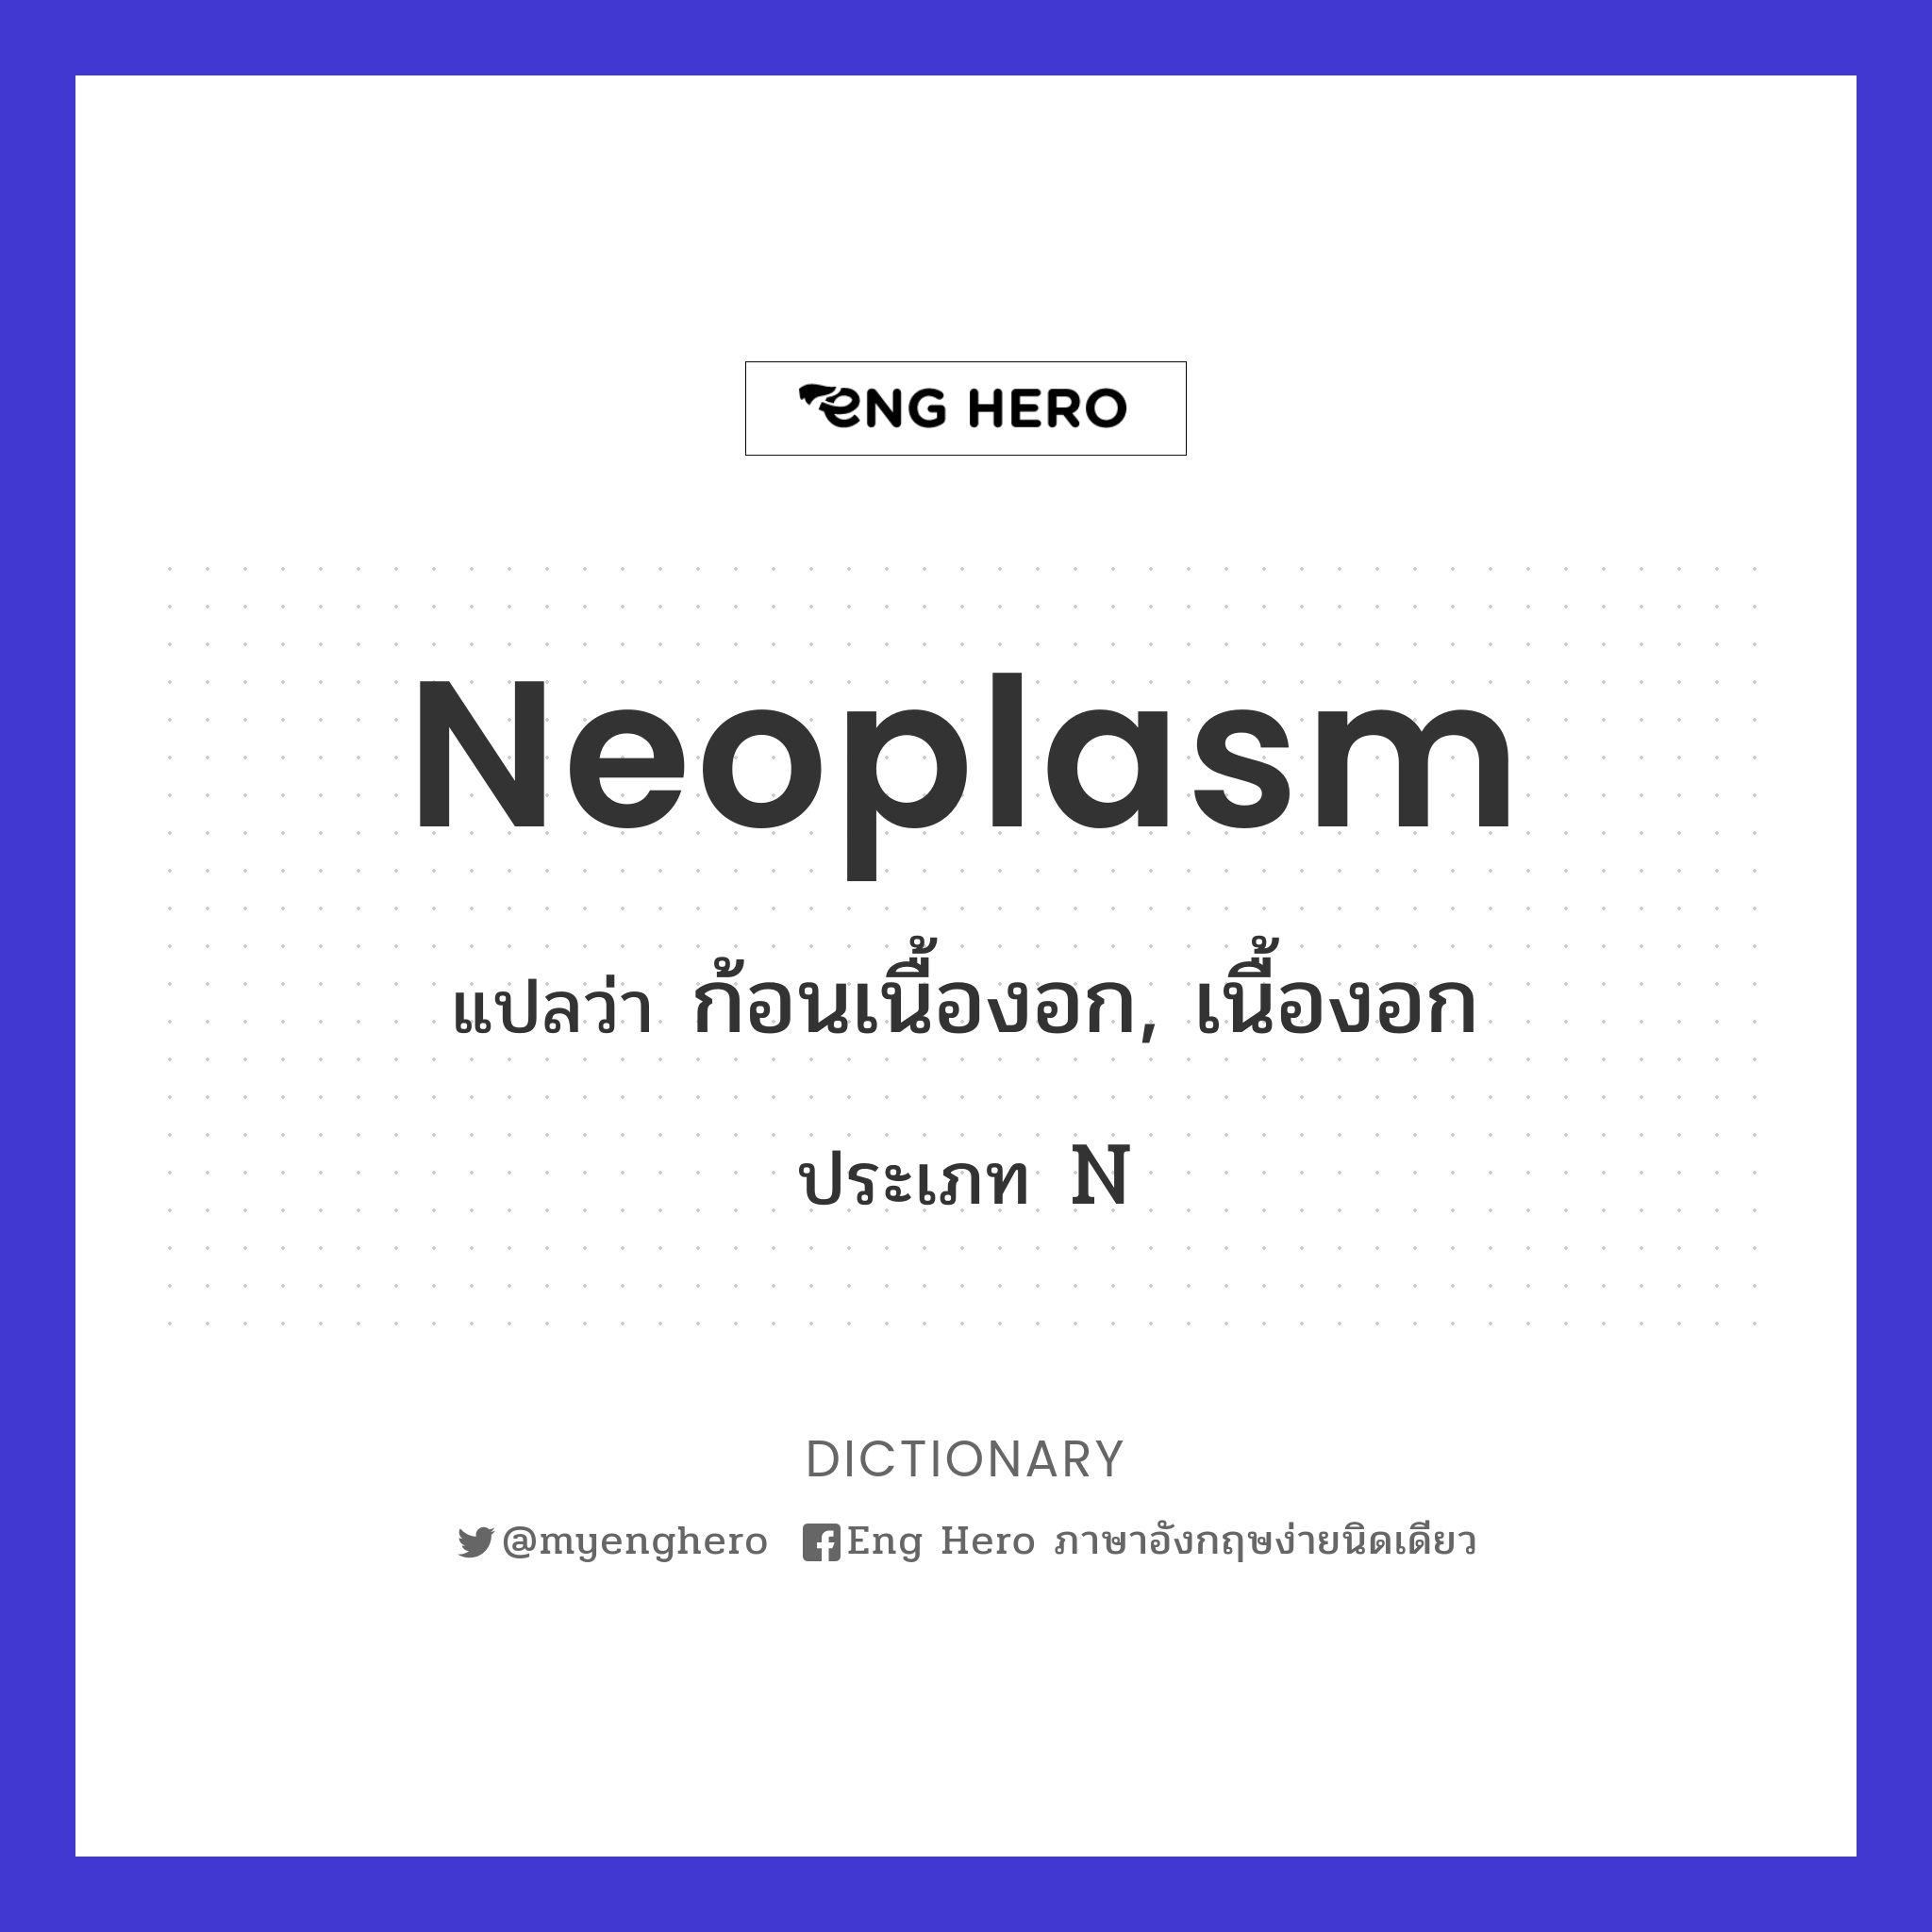 neoplasm